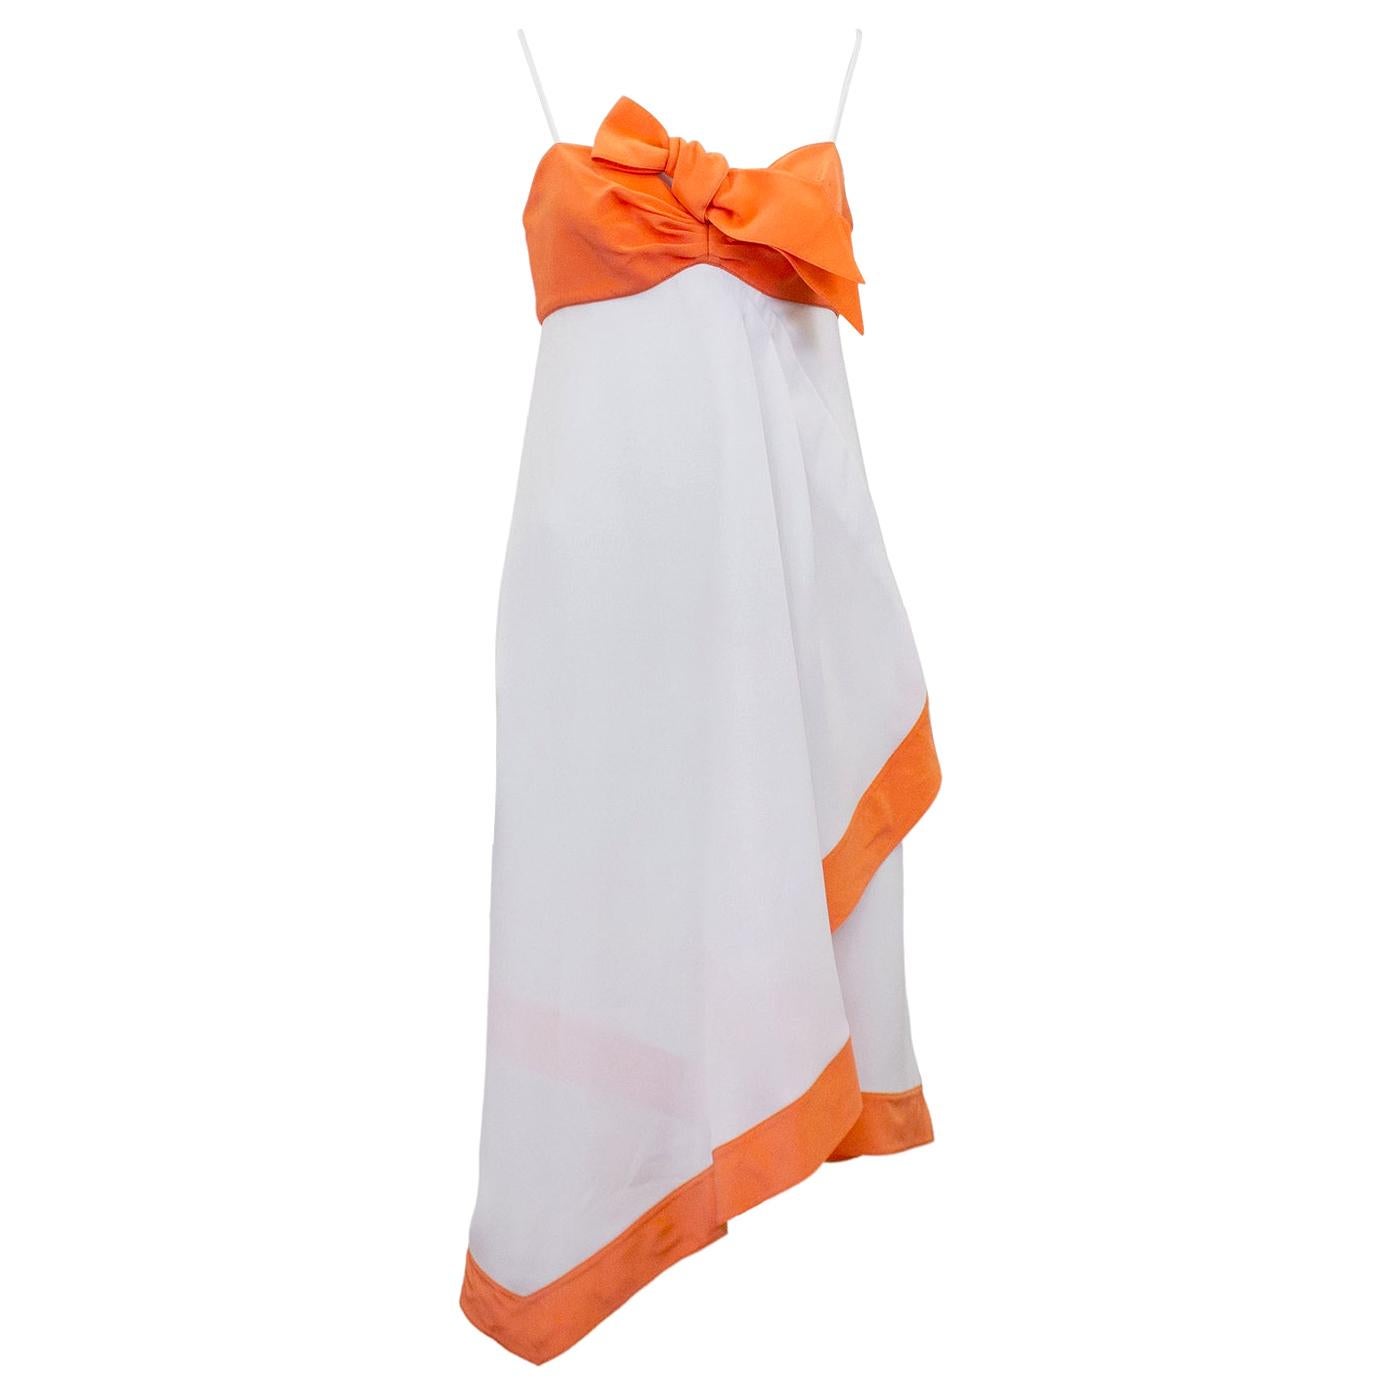 1990s Thierry Mugler Orange and White Empire Waist Cocktail Dress 